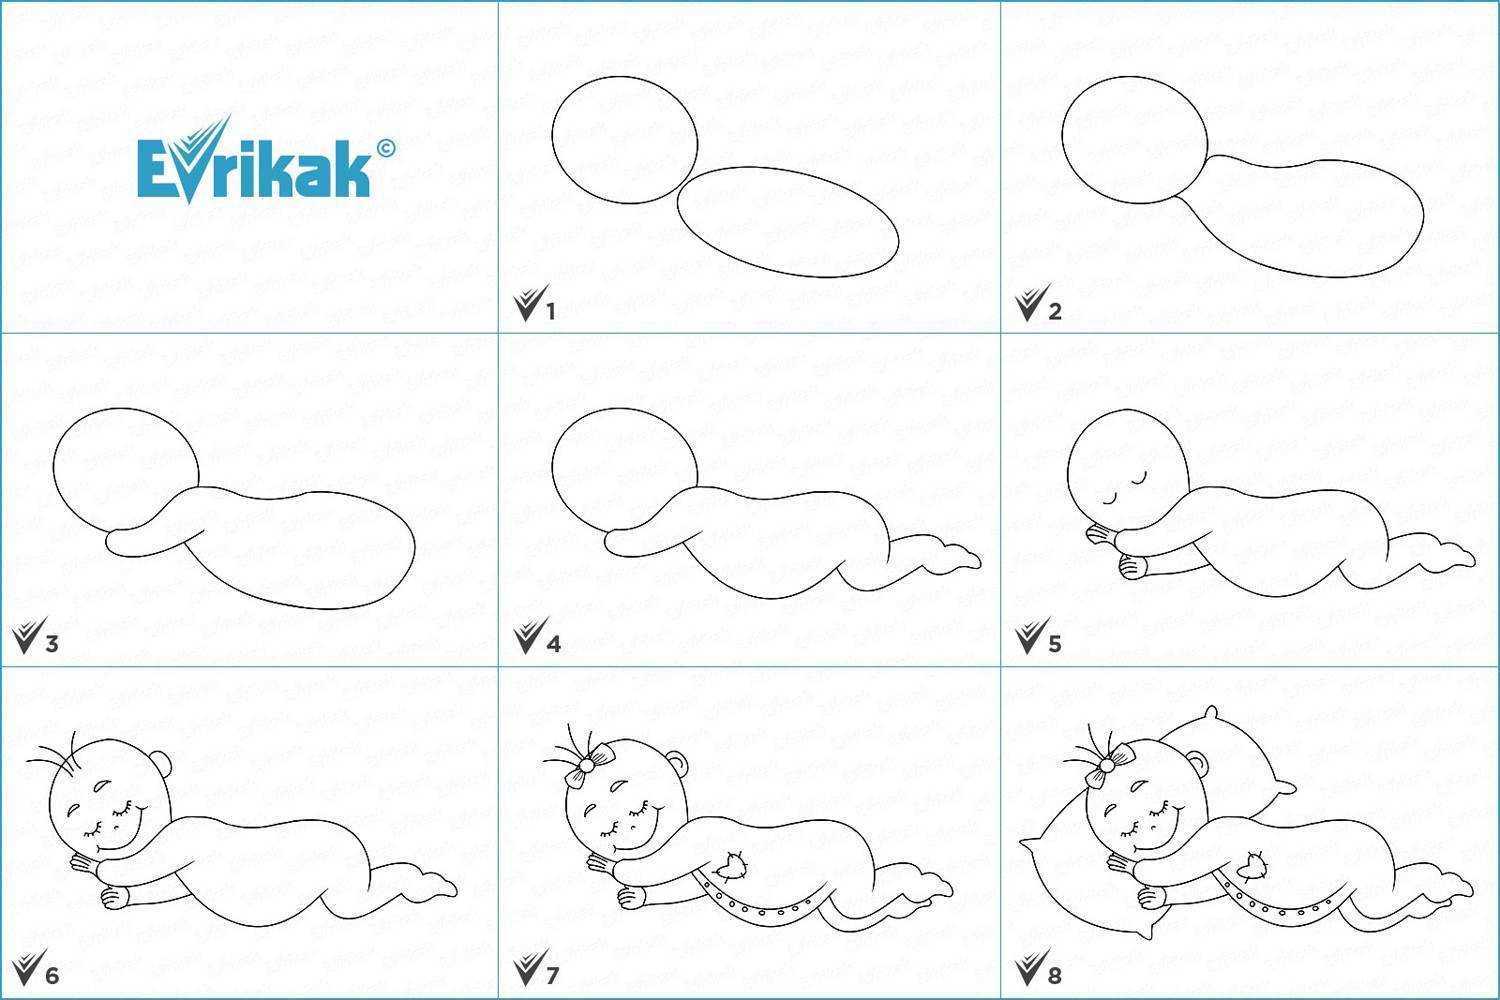 Как нарисовать ребенка карандашом - поэтапный мастер-класс создания рисунка ребенка